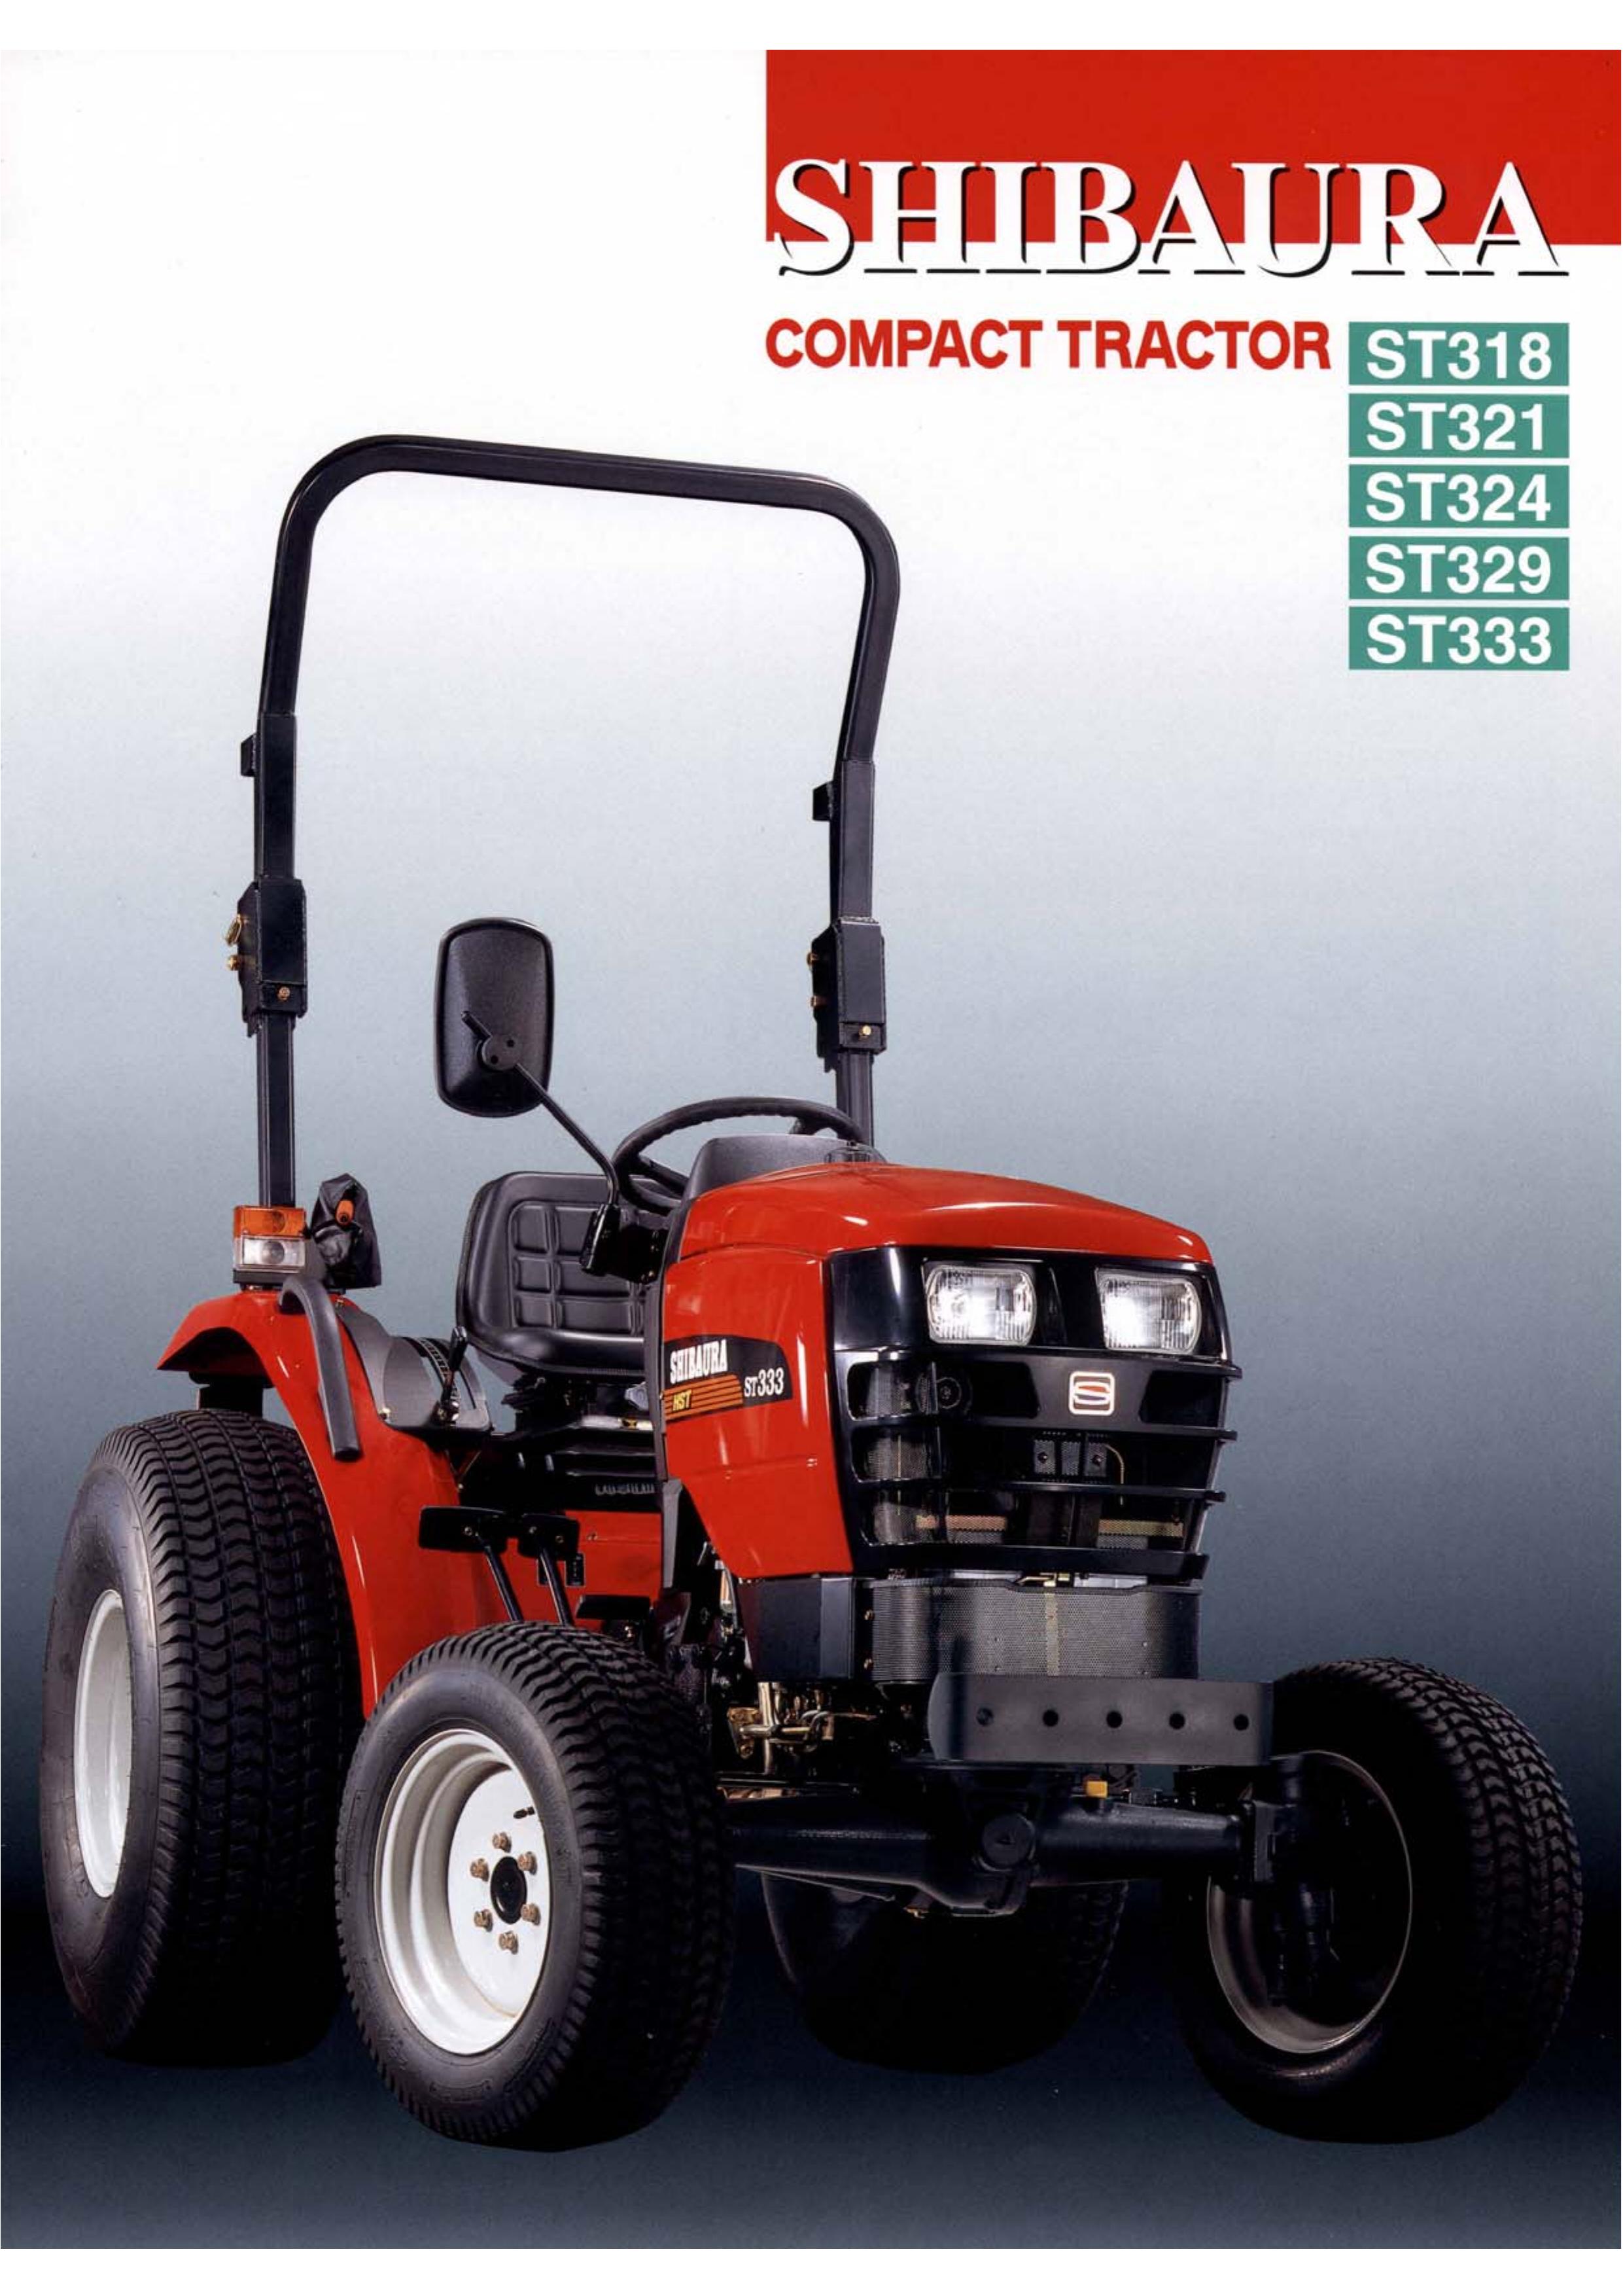 Shibaura ST318 Lawn Mower User Manual